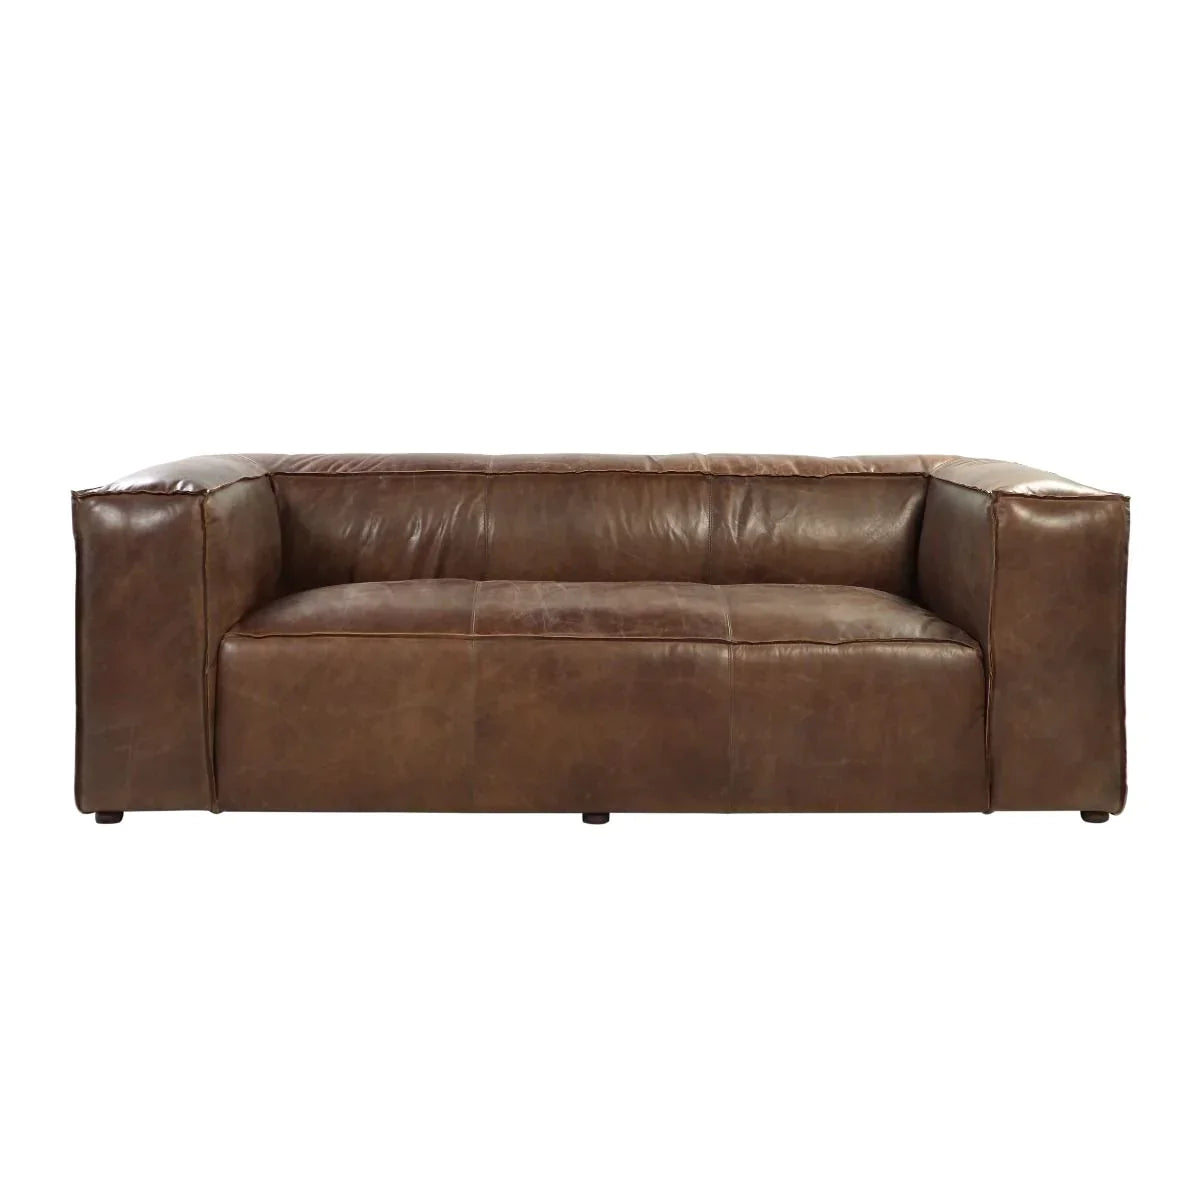 Brancaster  Sofa Model 53545 By ACME Furniture